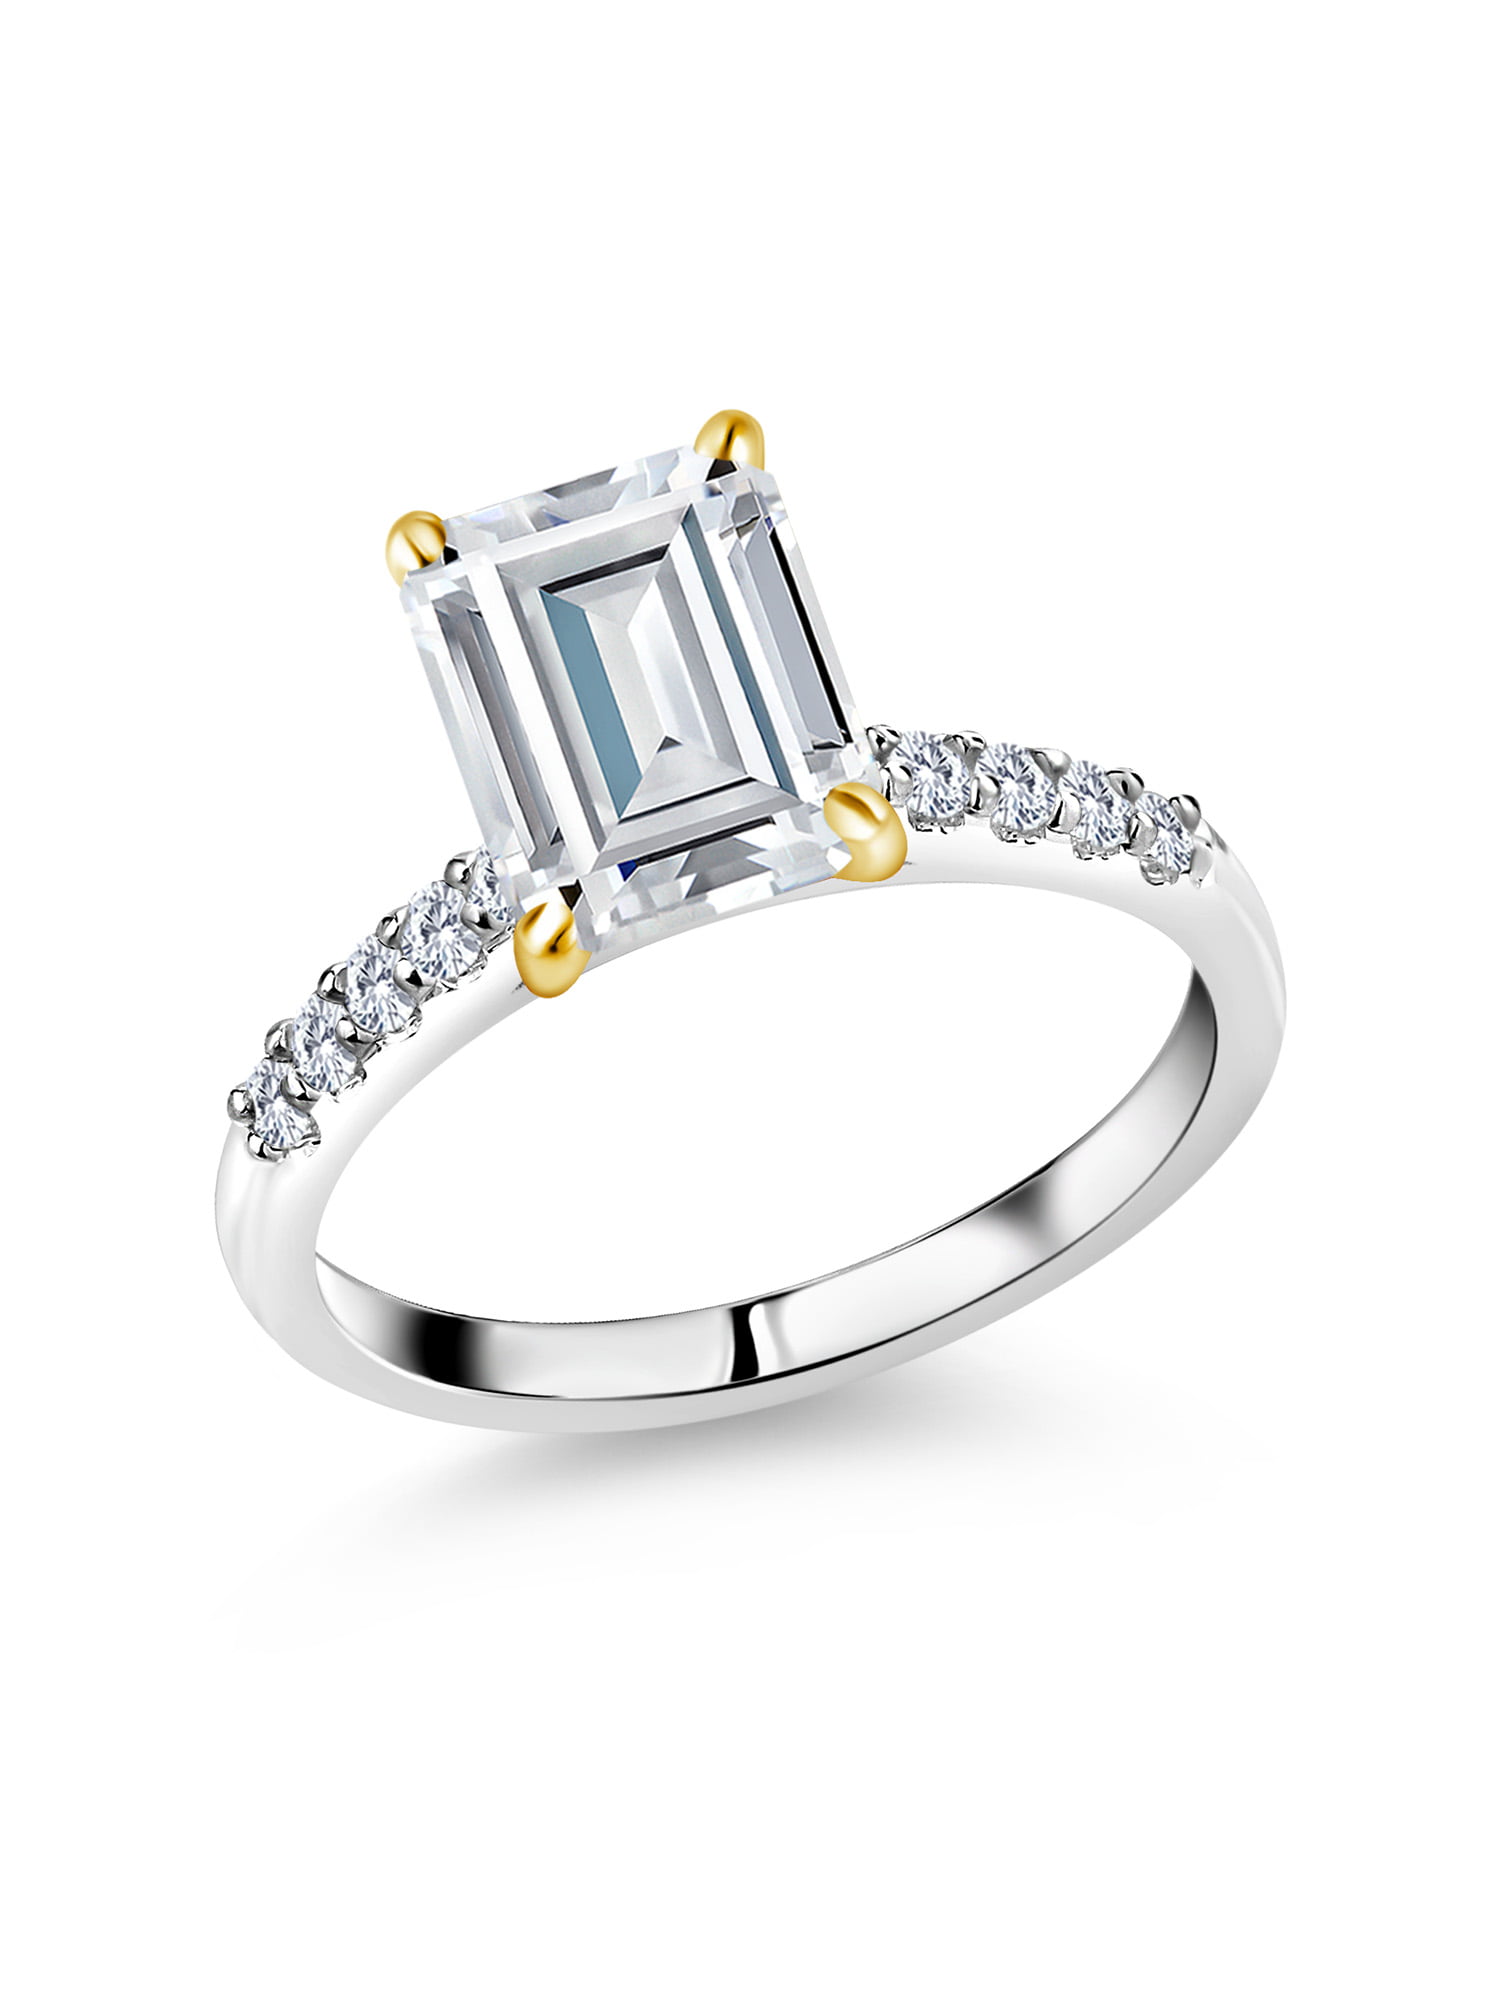 Sterling Silver 925 Oval Cut 10x8mm Cut Diamonds Engagement Fine Ring Semi Mount 